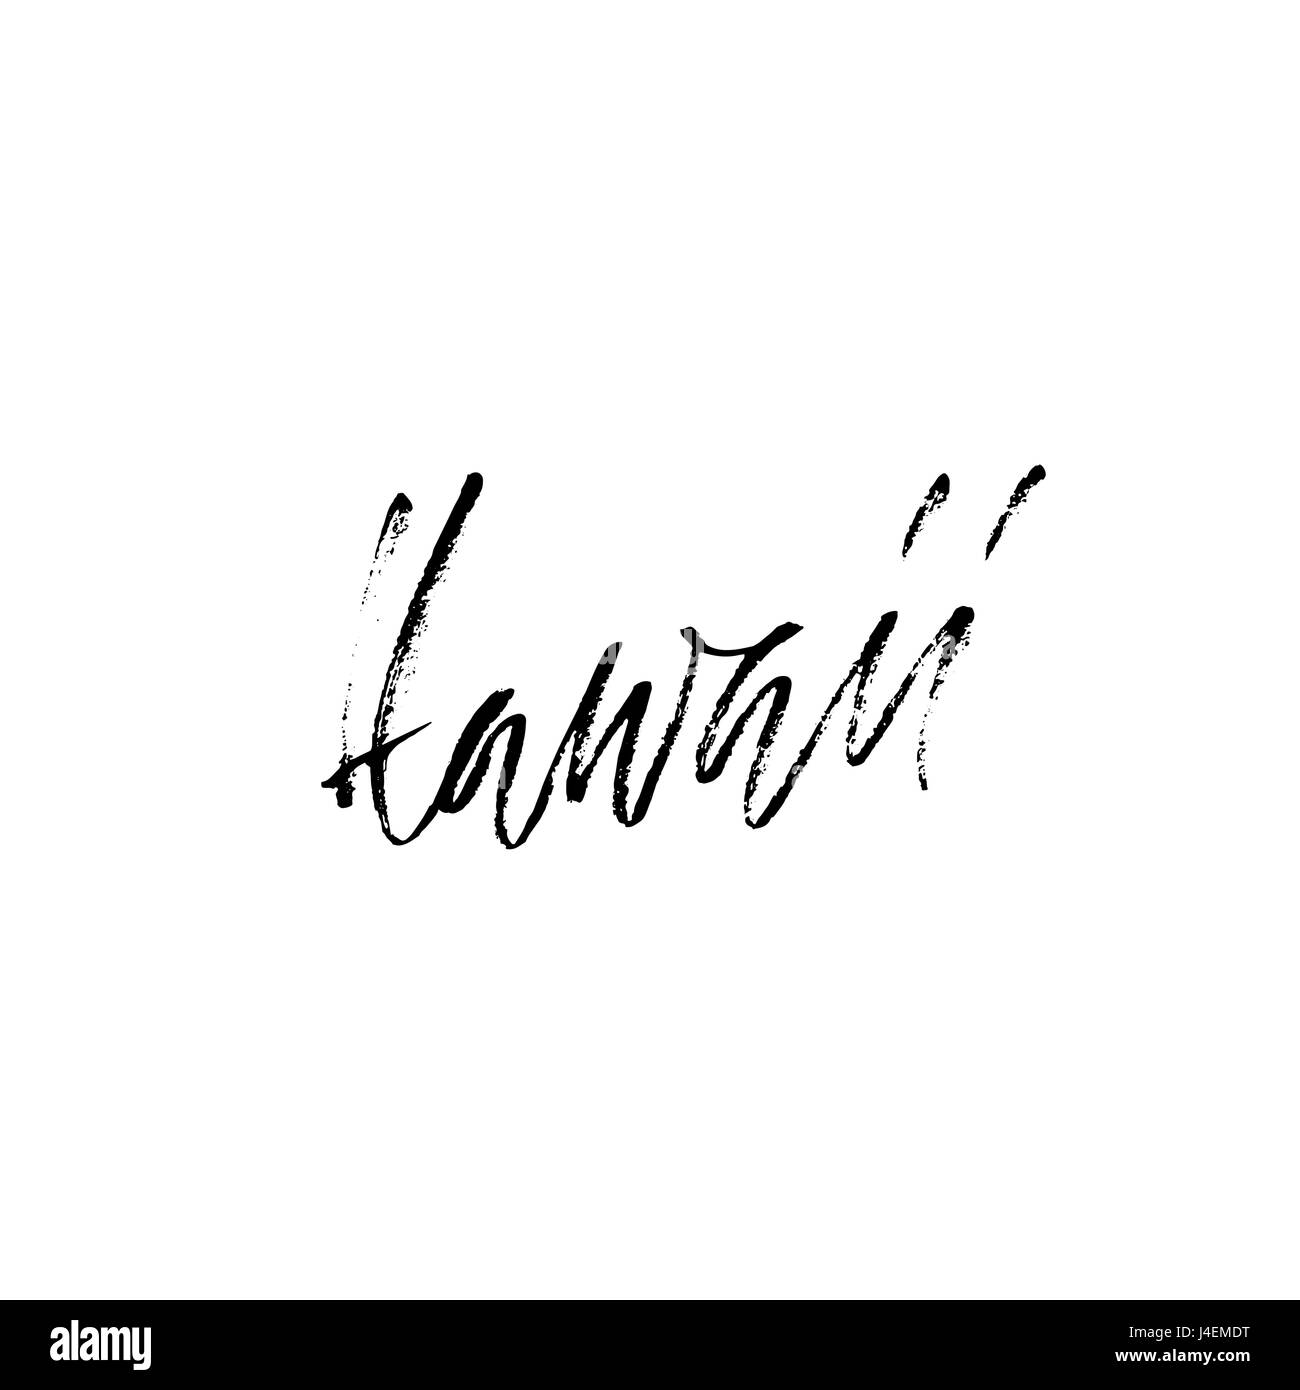 Hawaii-Hand-Schrift-Typografie-Design. Handschriftliche moderne trockenen Pinsel Inschrift. Vektor-Illustration. Stock Vektor